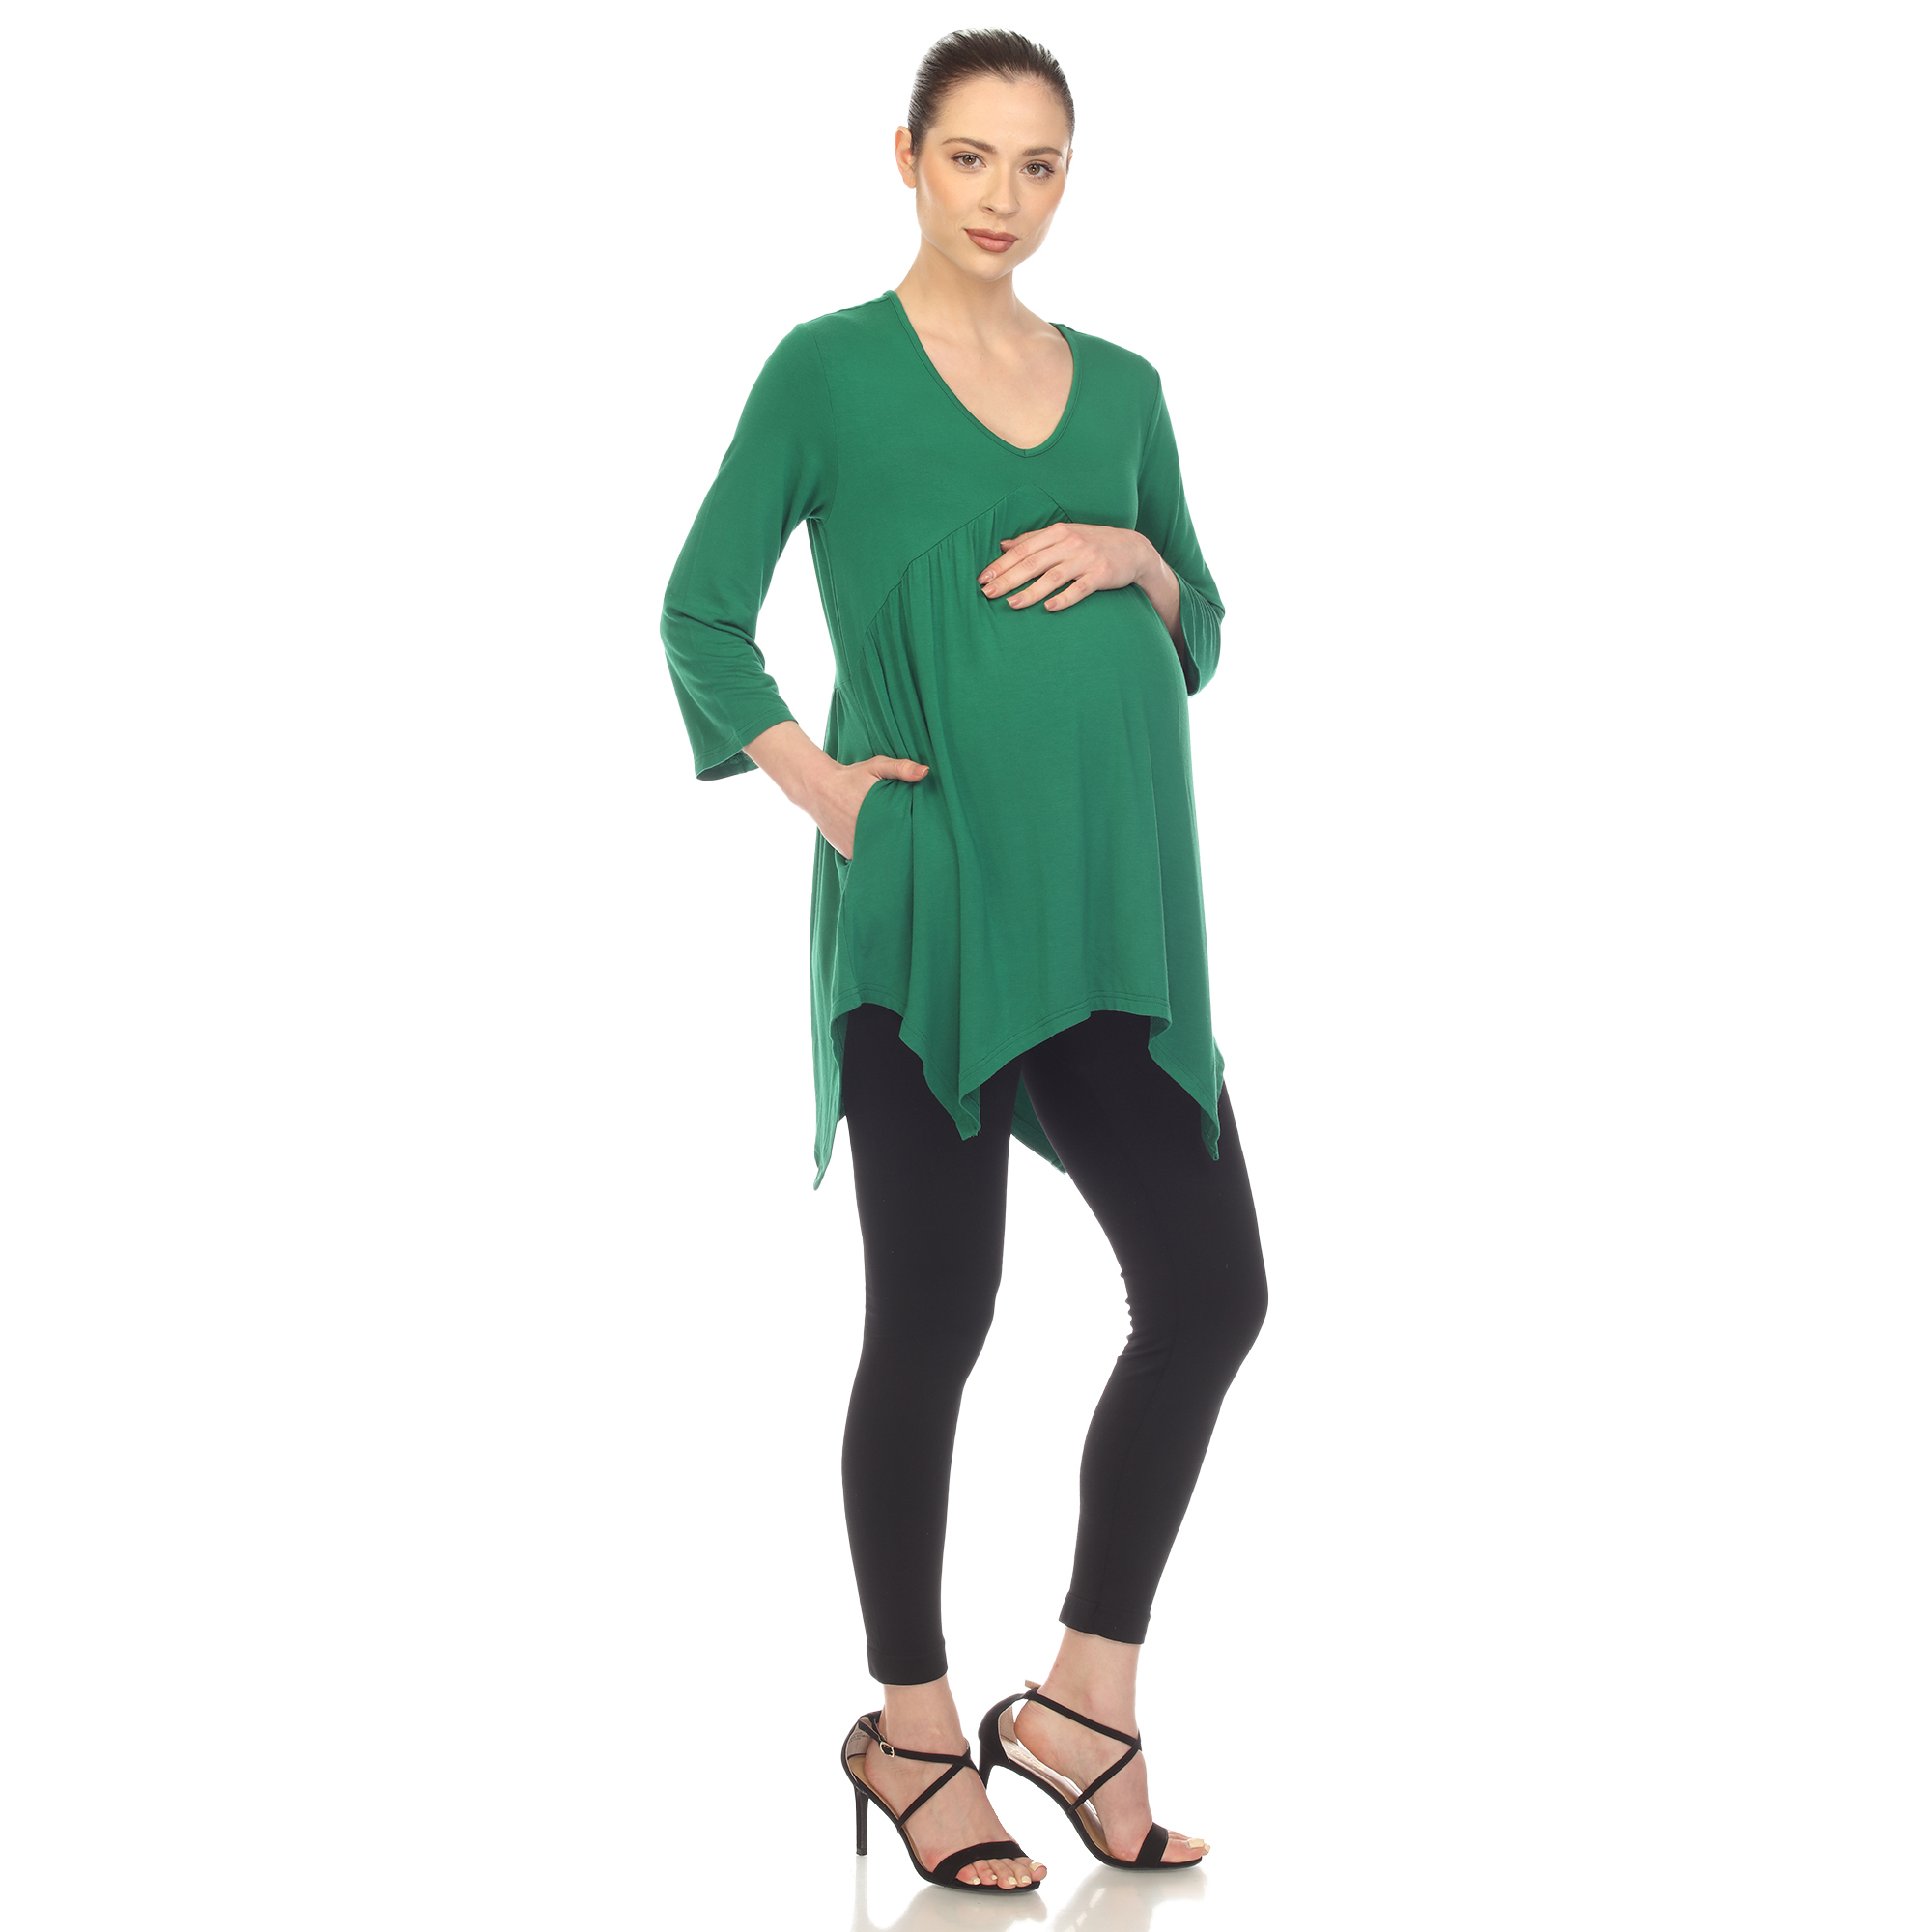 White Mark Women's Maternity Empire Waist V-Neck Tunic Top - Green, 2X